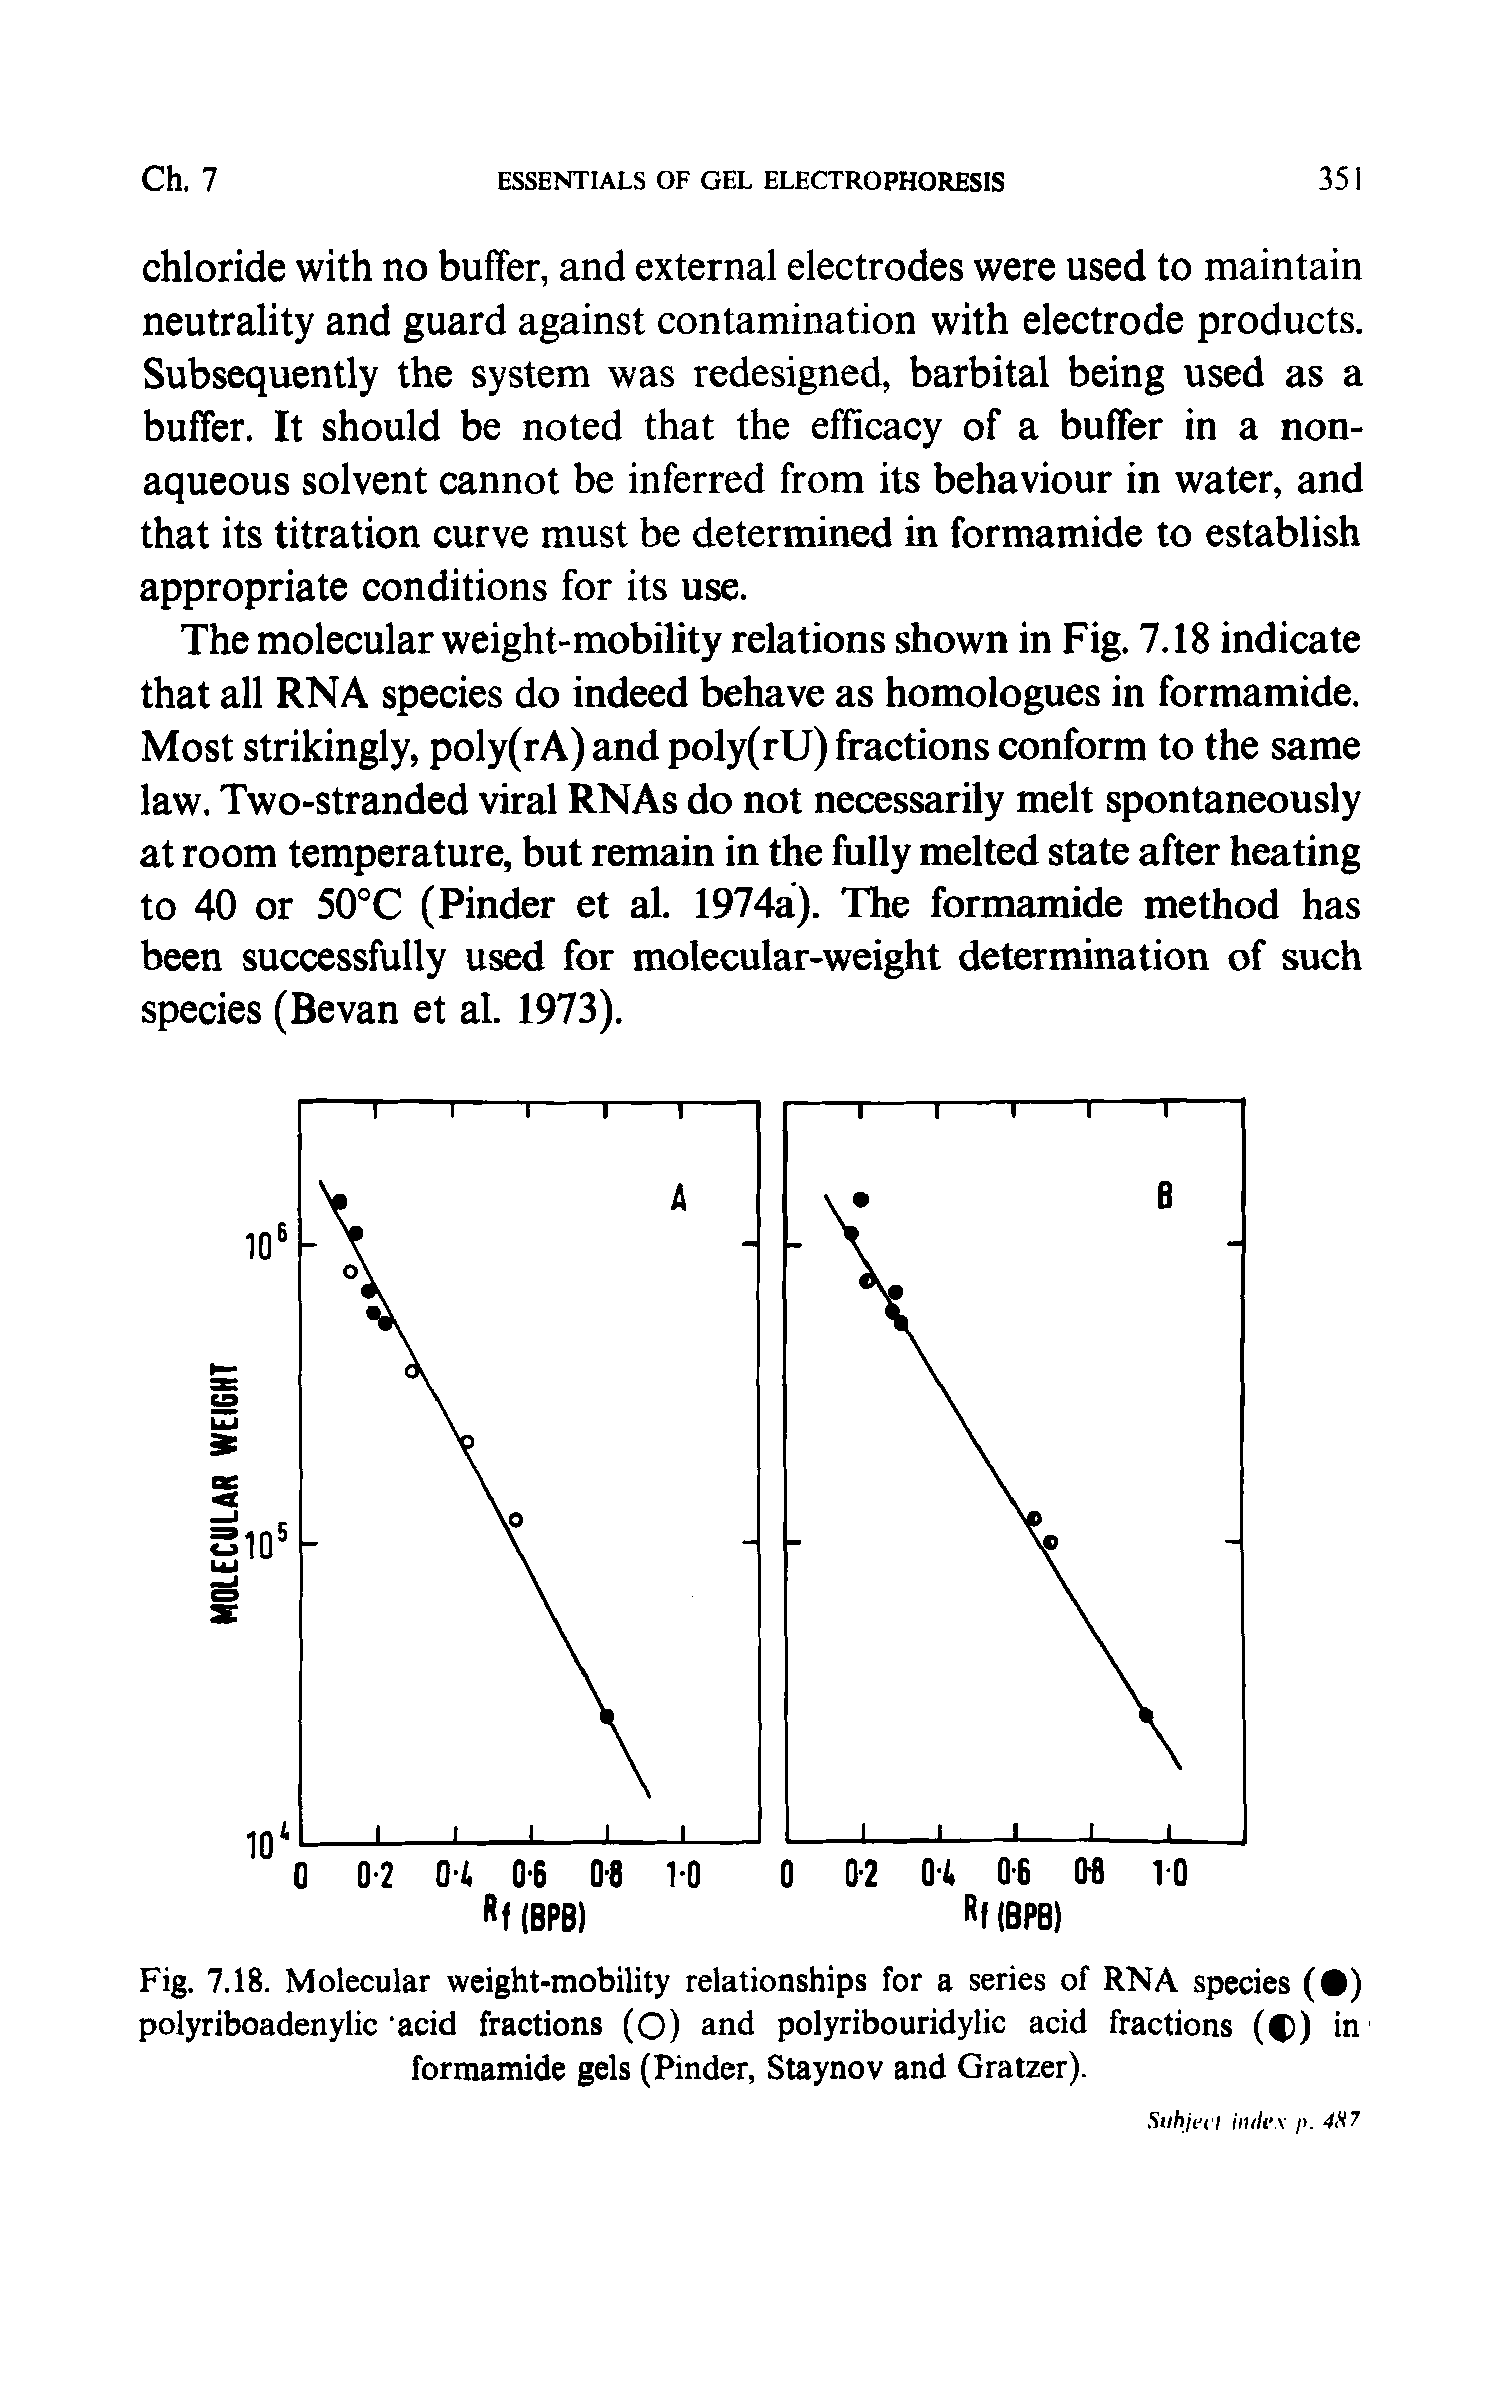 Fig. 7.18. Molecular weight-mobility relationships for a series of RNA species ( ) polyriboadenylic acid fractions (O) and polyribouridylic acid fractions (f)) in formamide gels (Finder, Staynov and Gratzer).